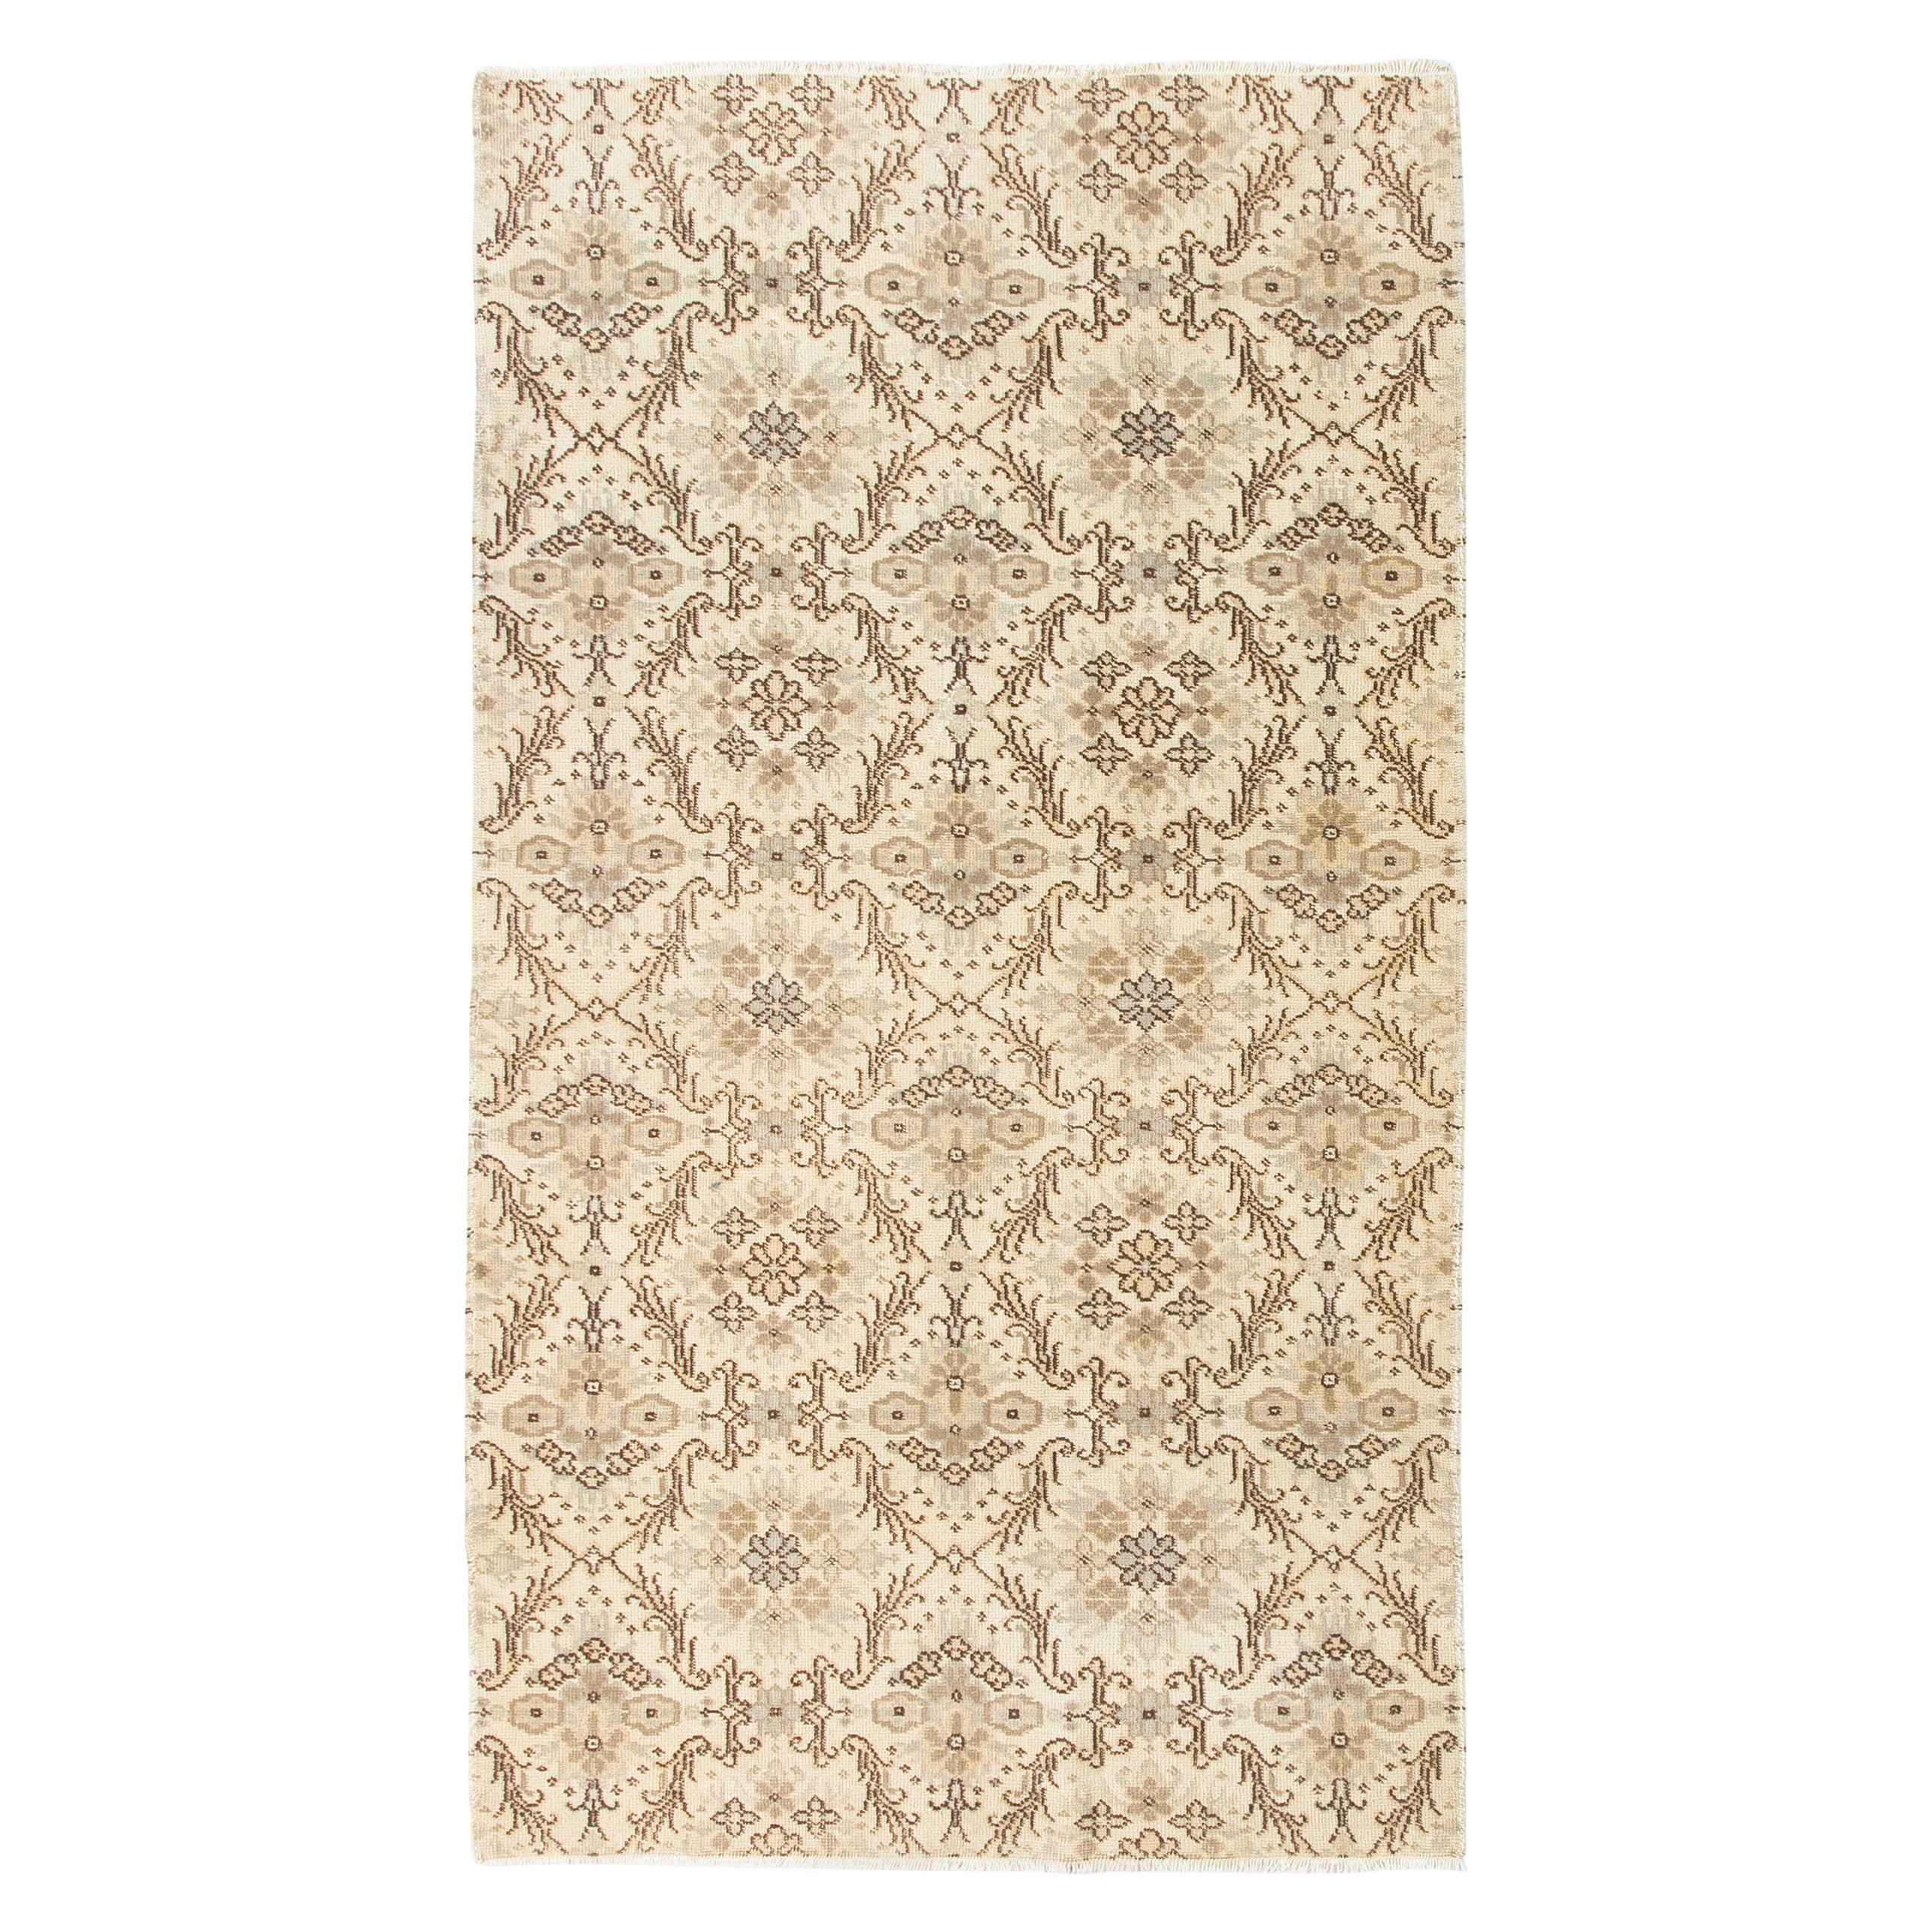 4.2x7.4 Ft Vintage Floral Design Handmade Anatolian Rug, Woolen Floor Covering